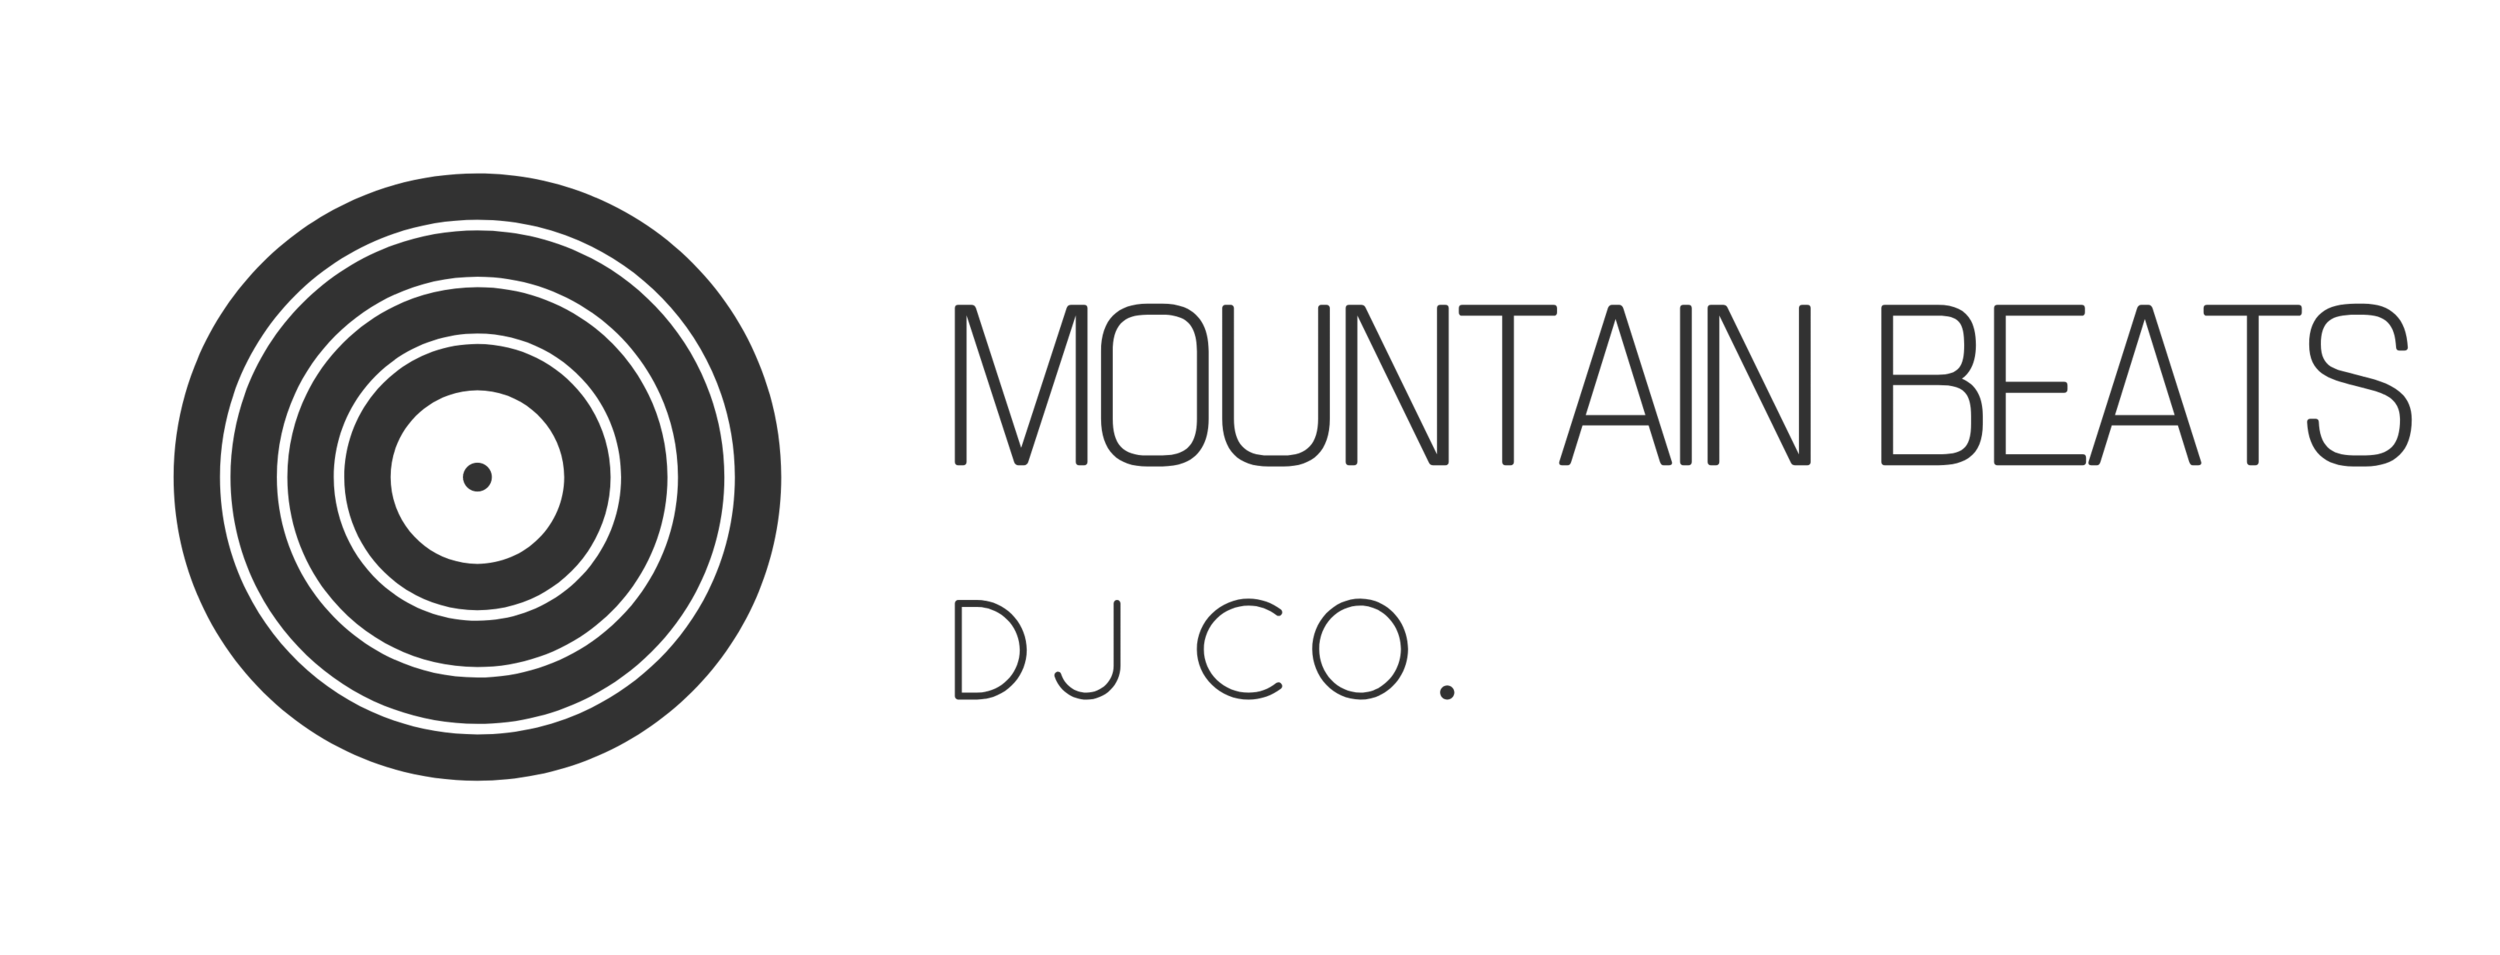 Mountain Beats Dj Co